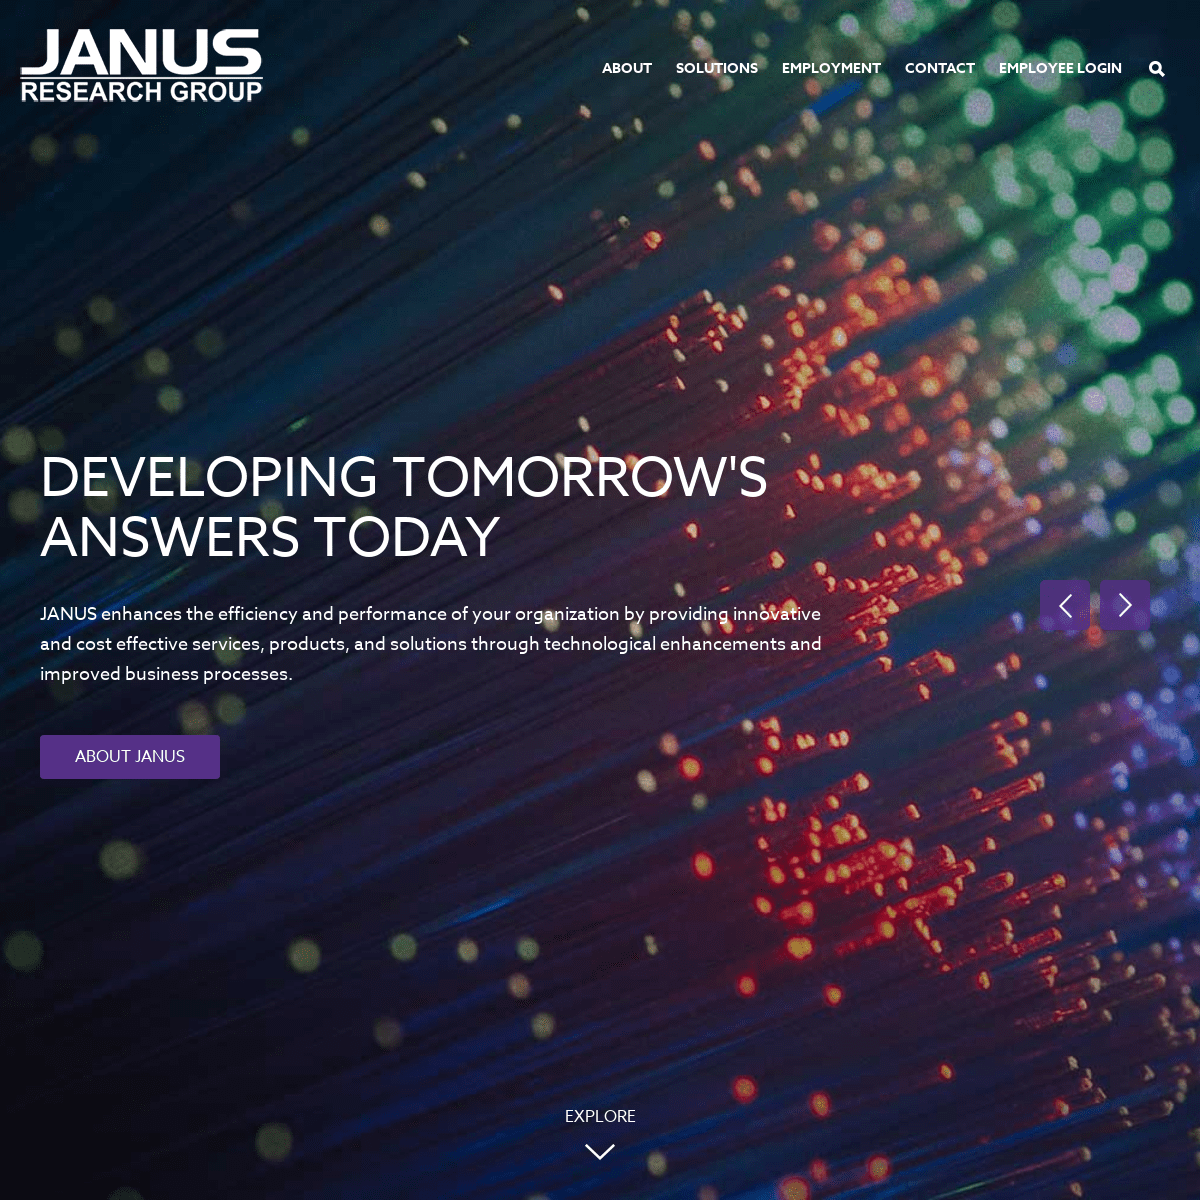 A complete backup of janusresearch.com